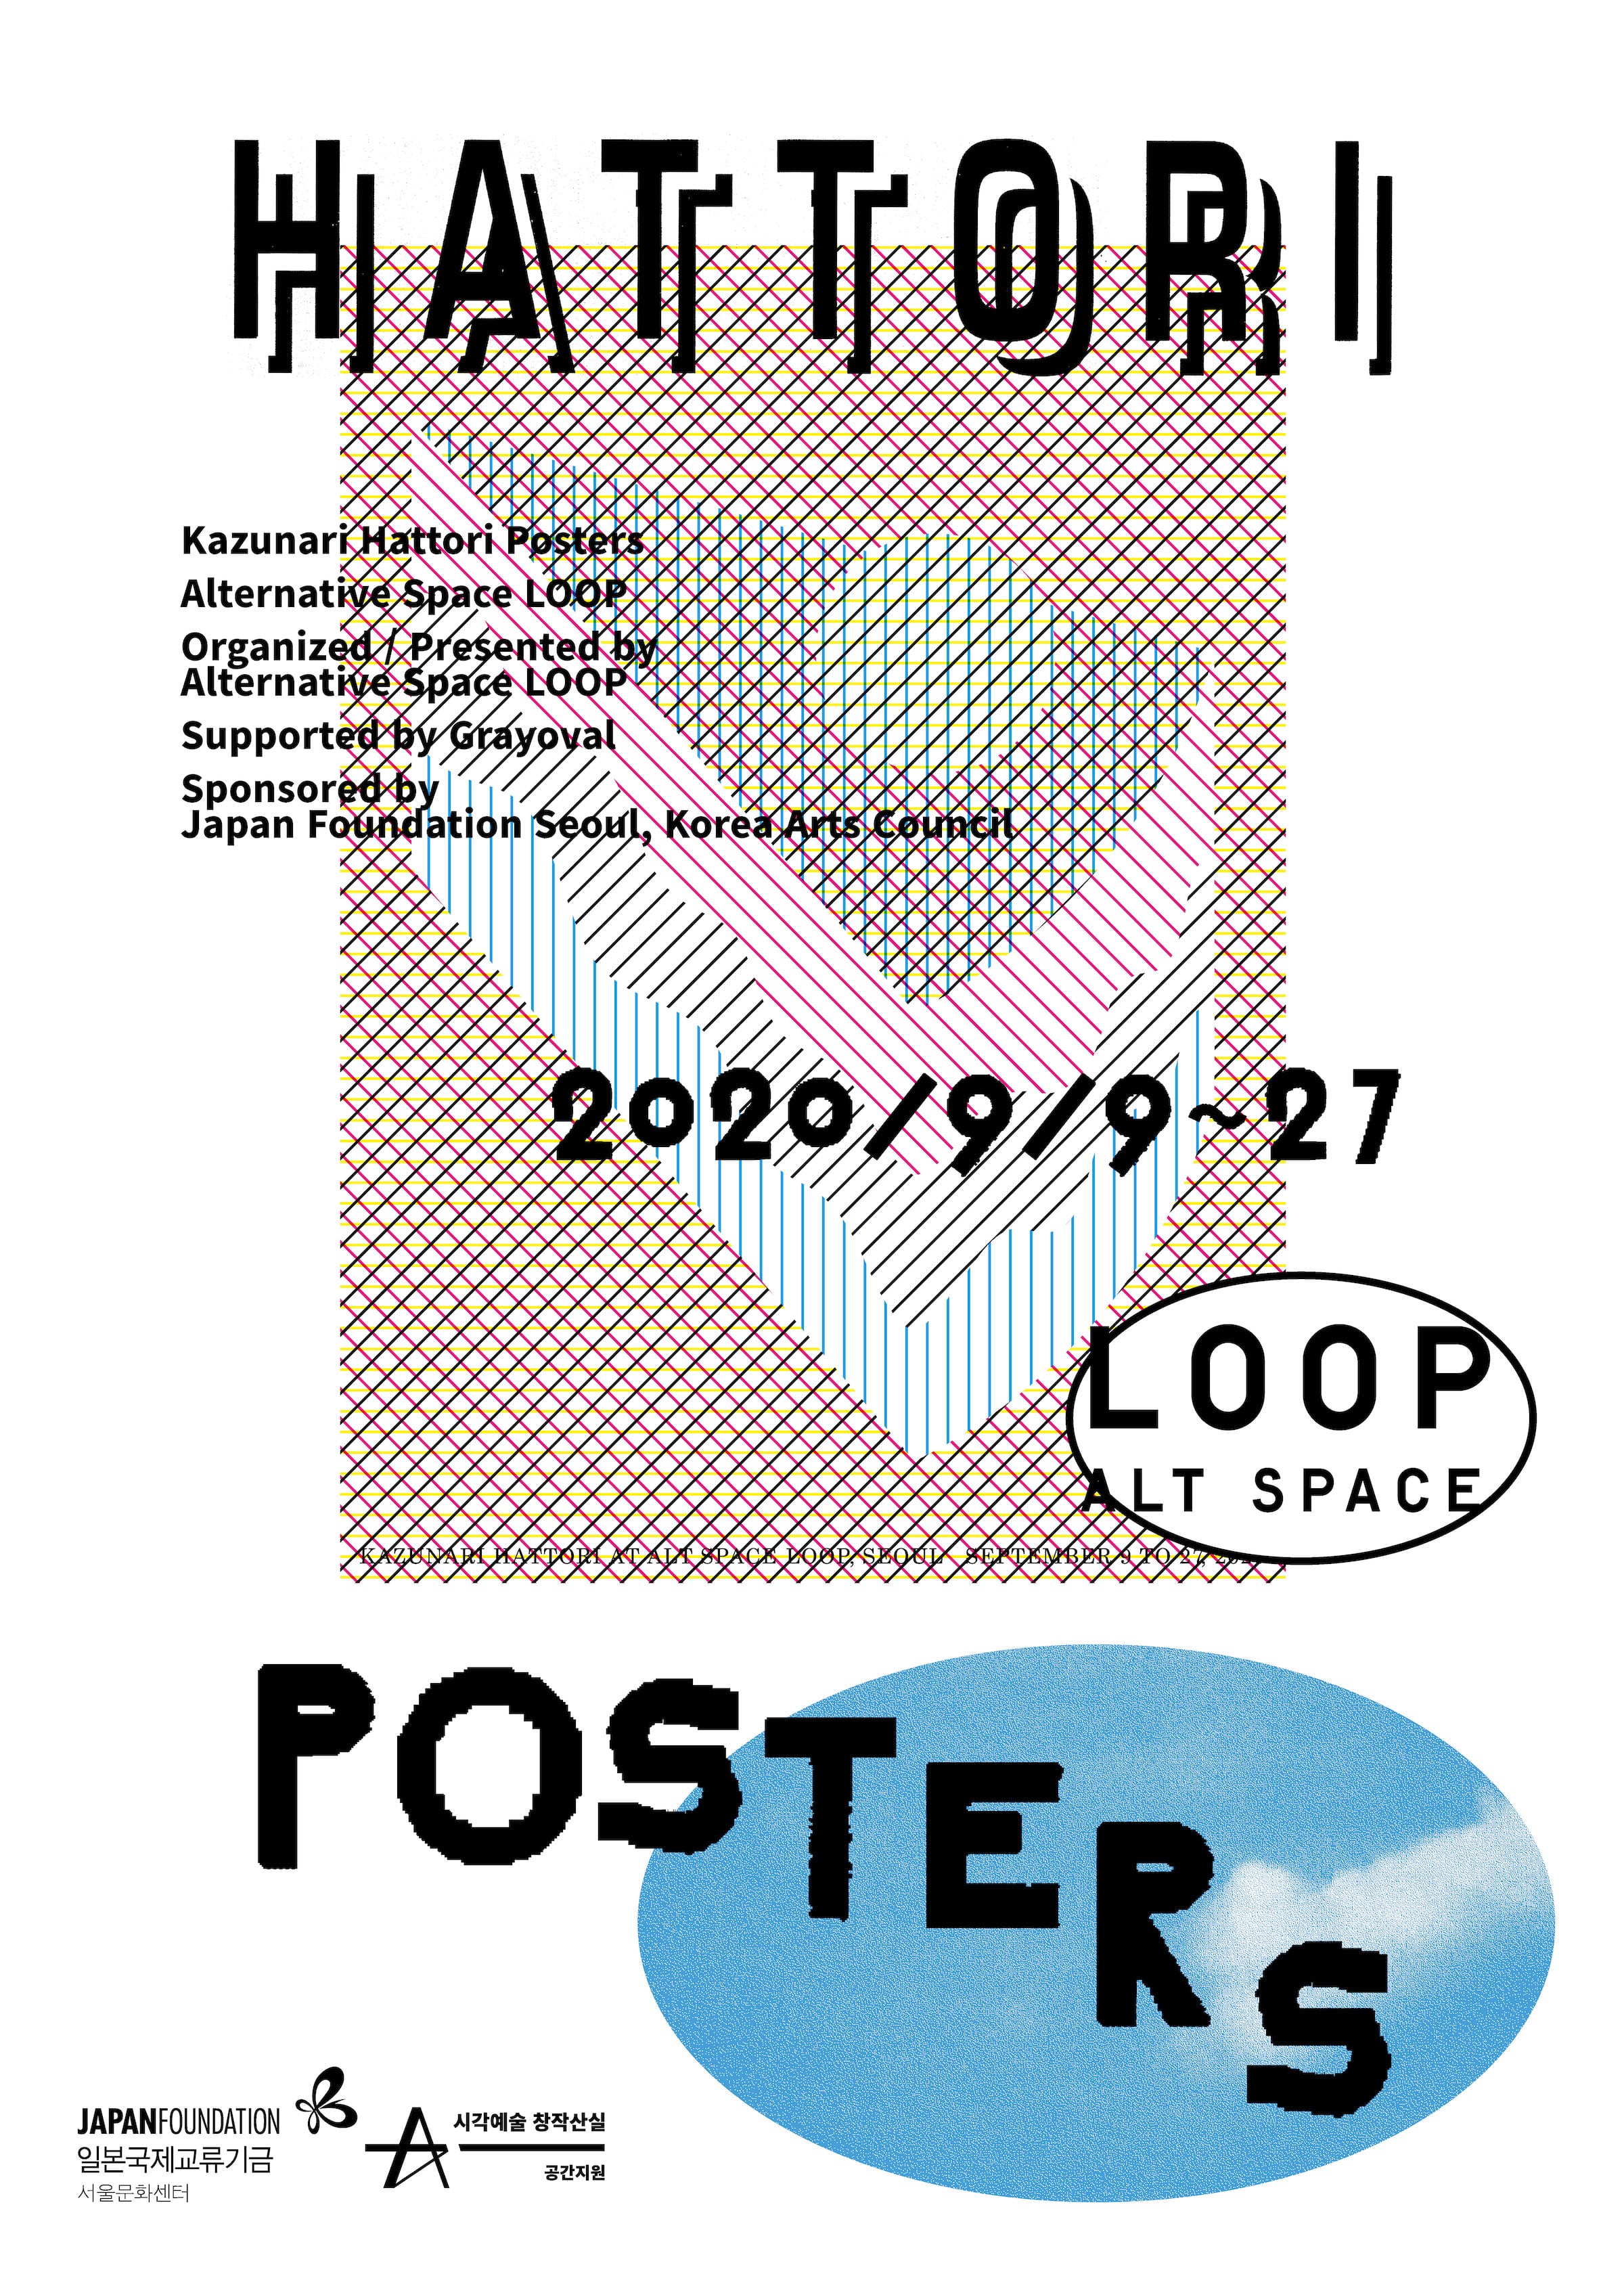 Kazunari Hattori Posters